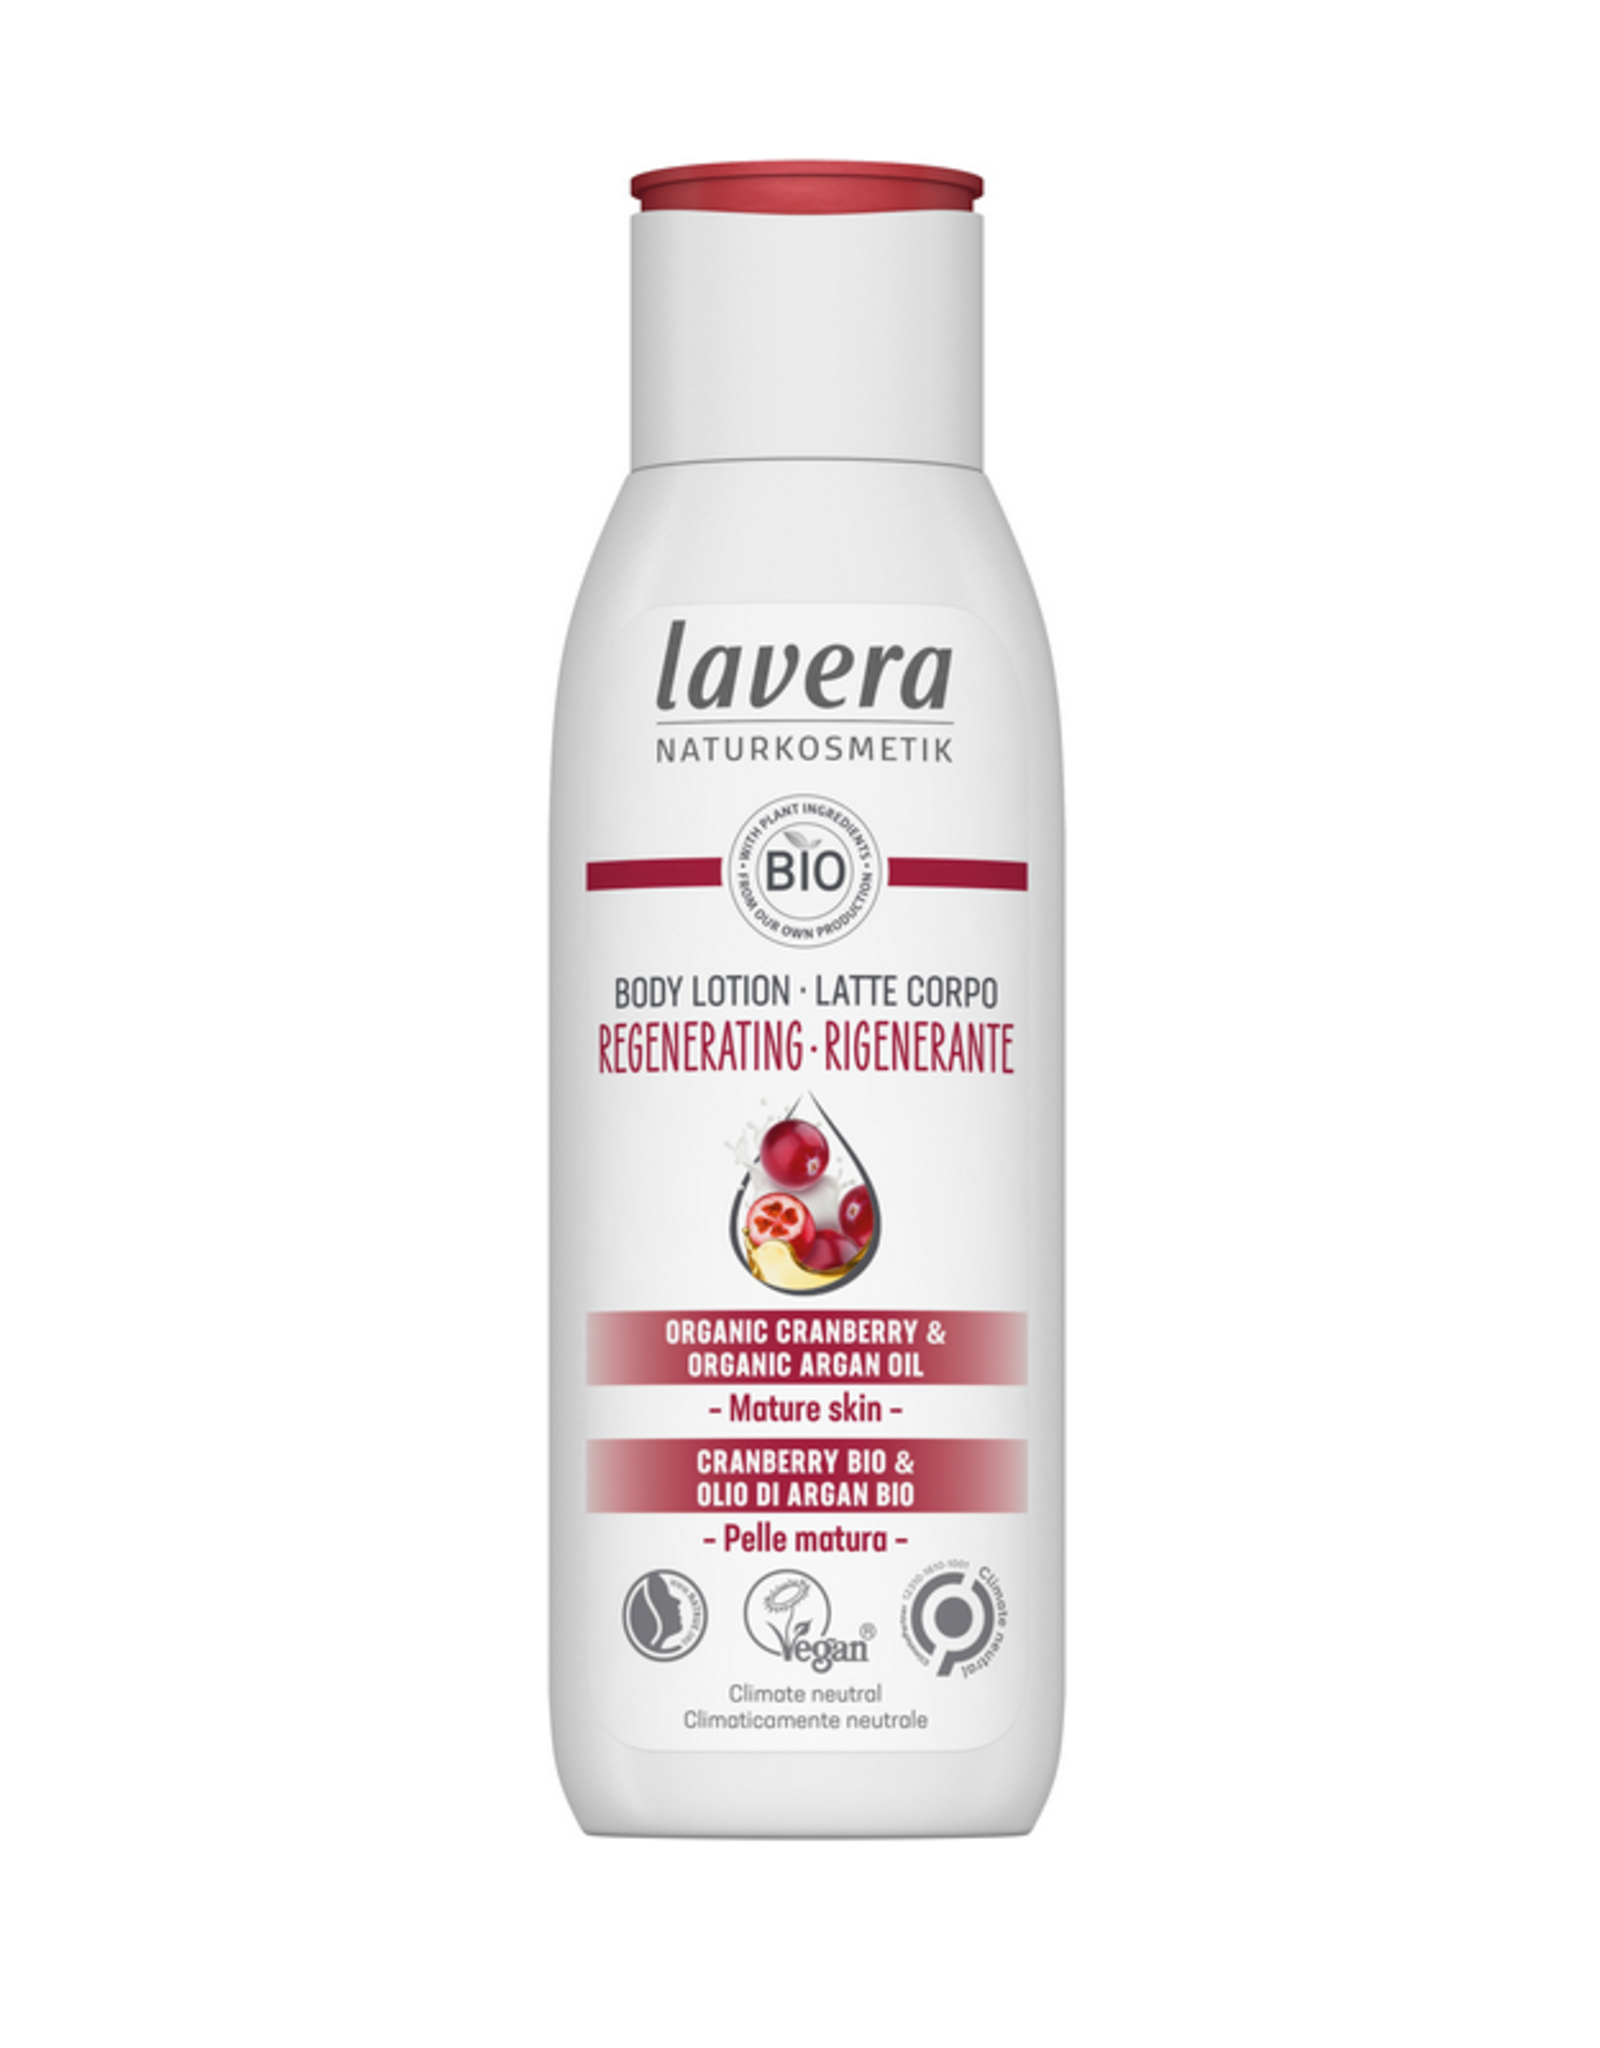 Lavera Bodylotion regenerating/lait creme bio 200 Milliliter